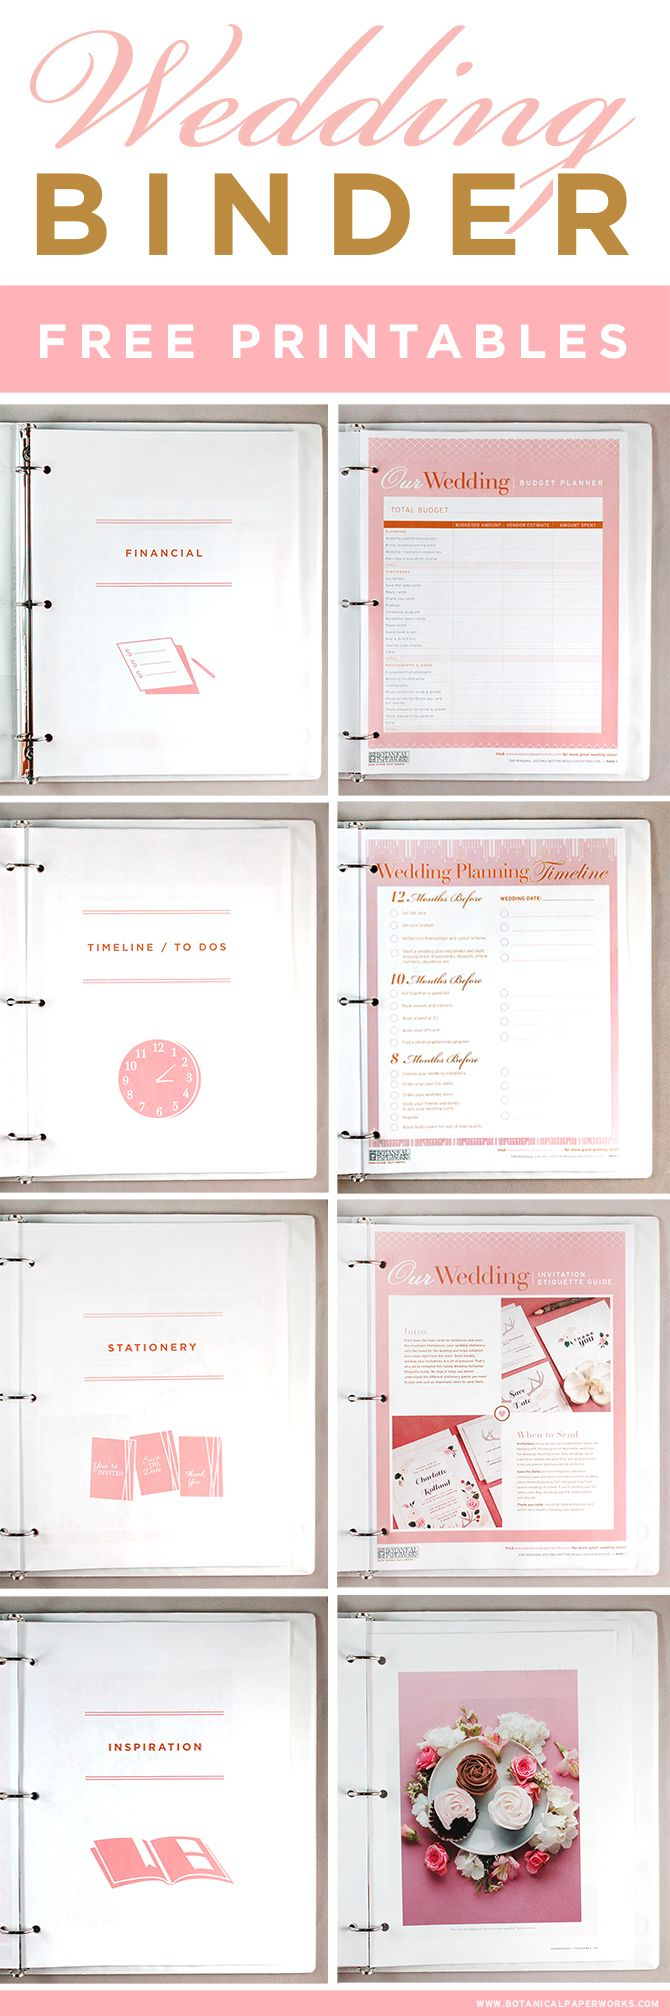 Wedding Planner Guide Free Printable – Wedding Planner Template - Free Printable Wedding Planner Forms